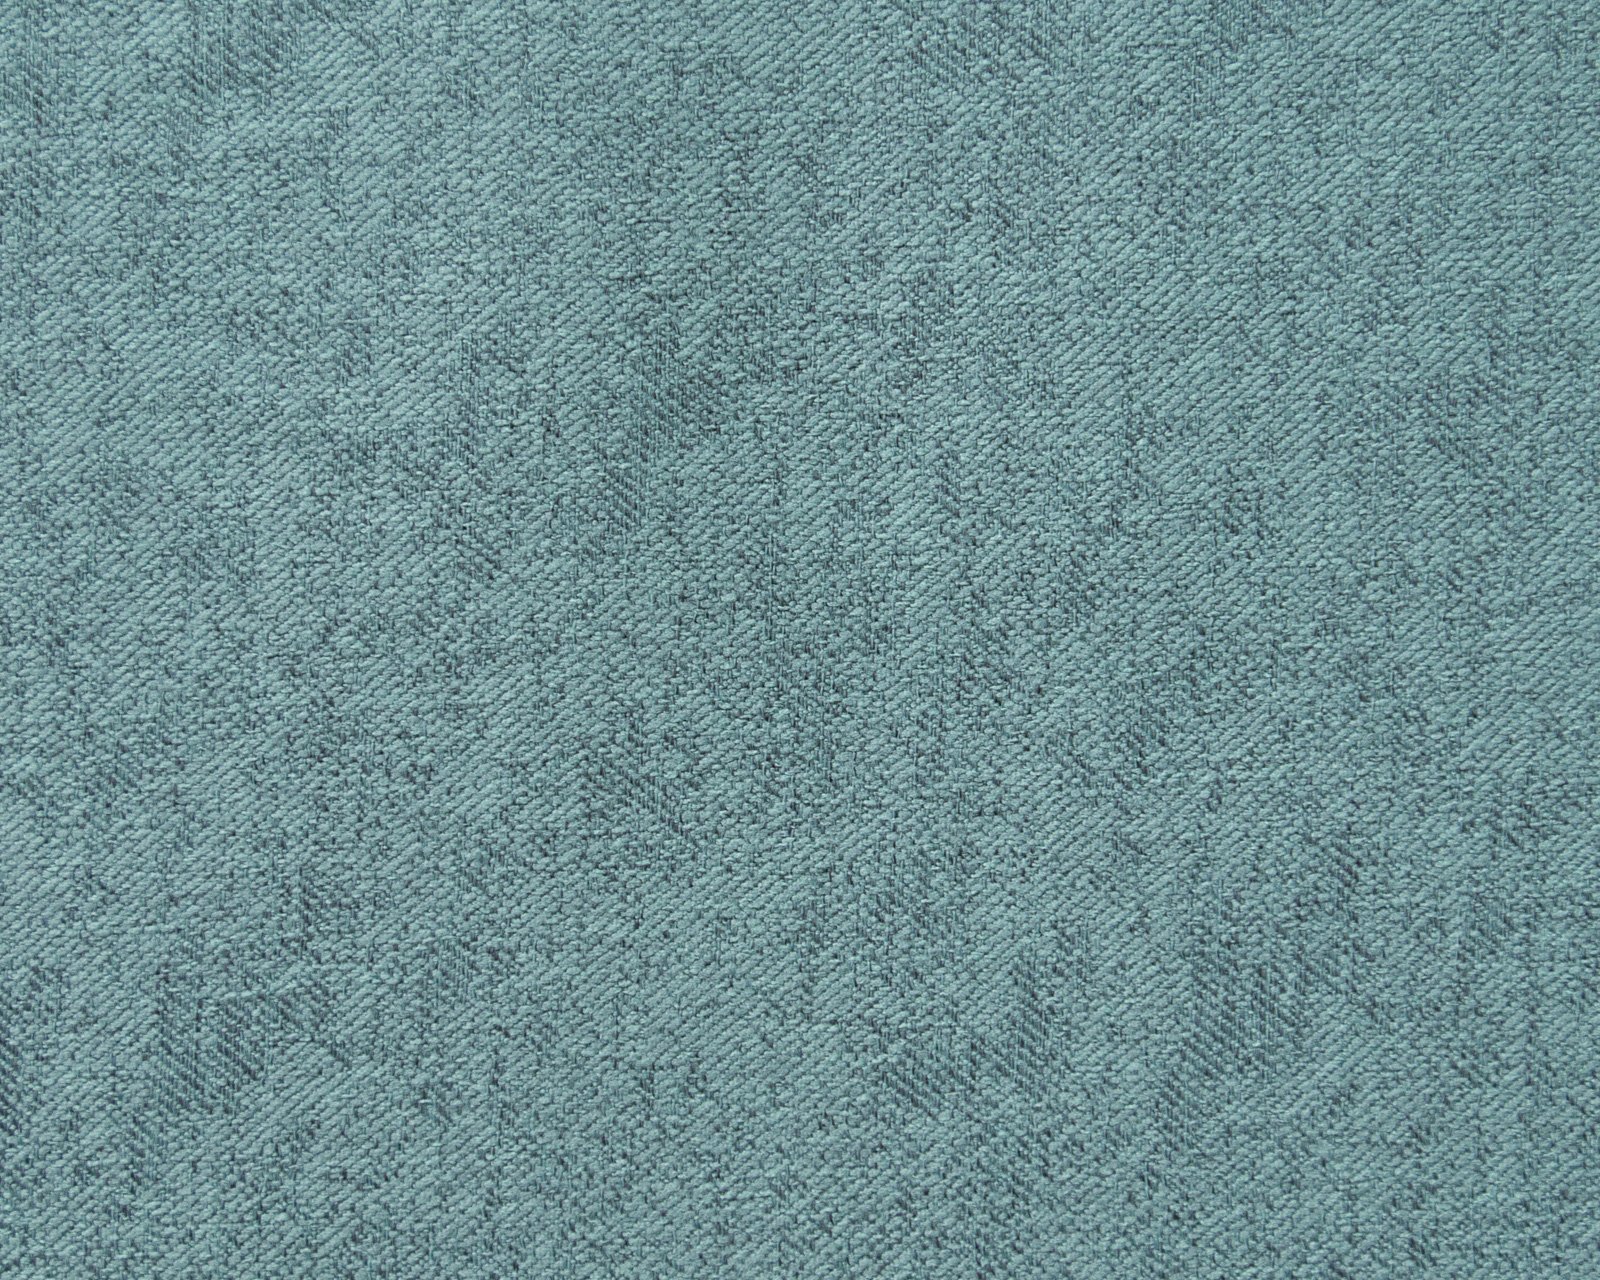 Текстура махрового полотенца бесшовная - 33 фото